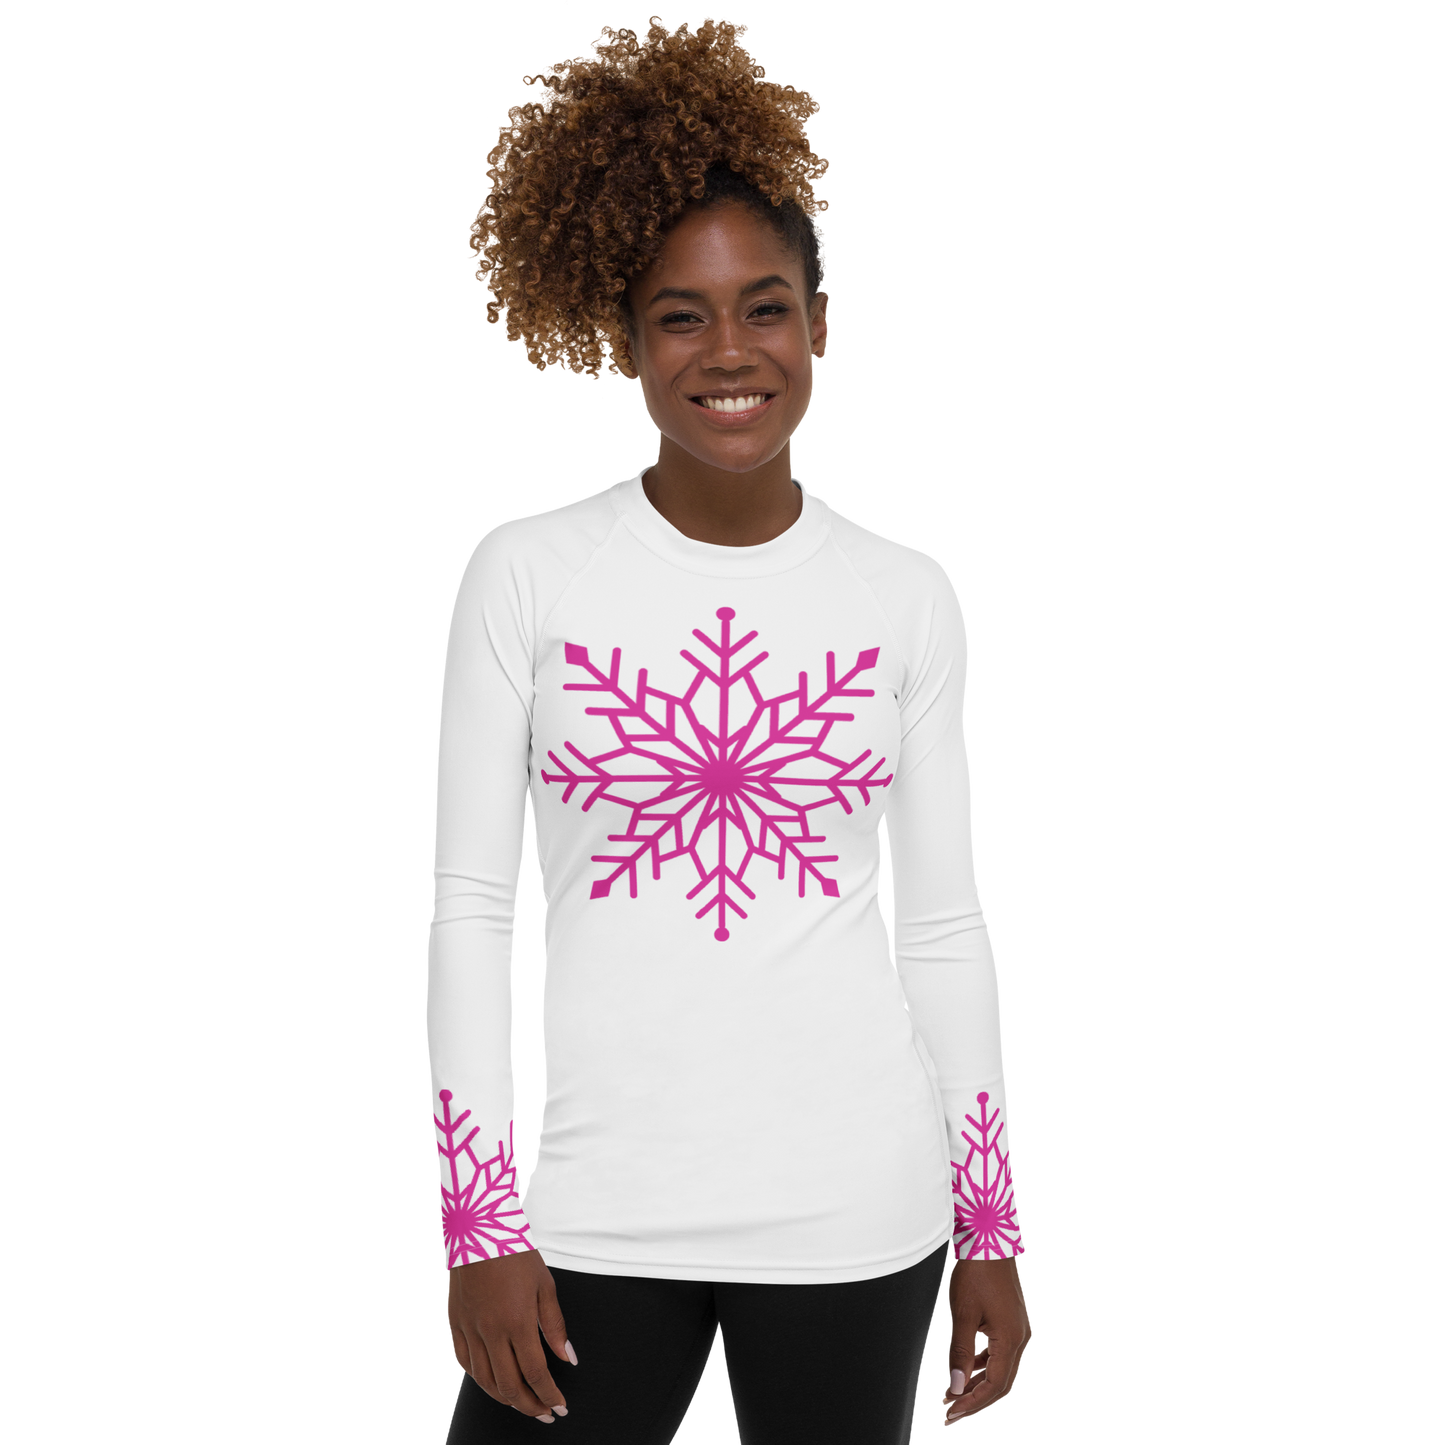 Winter Snowflake Top, Hot Pink Snowflake on White Women's Rash Guard, Holiday Top